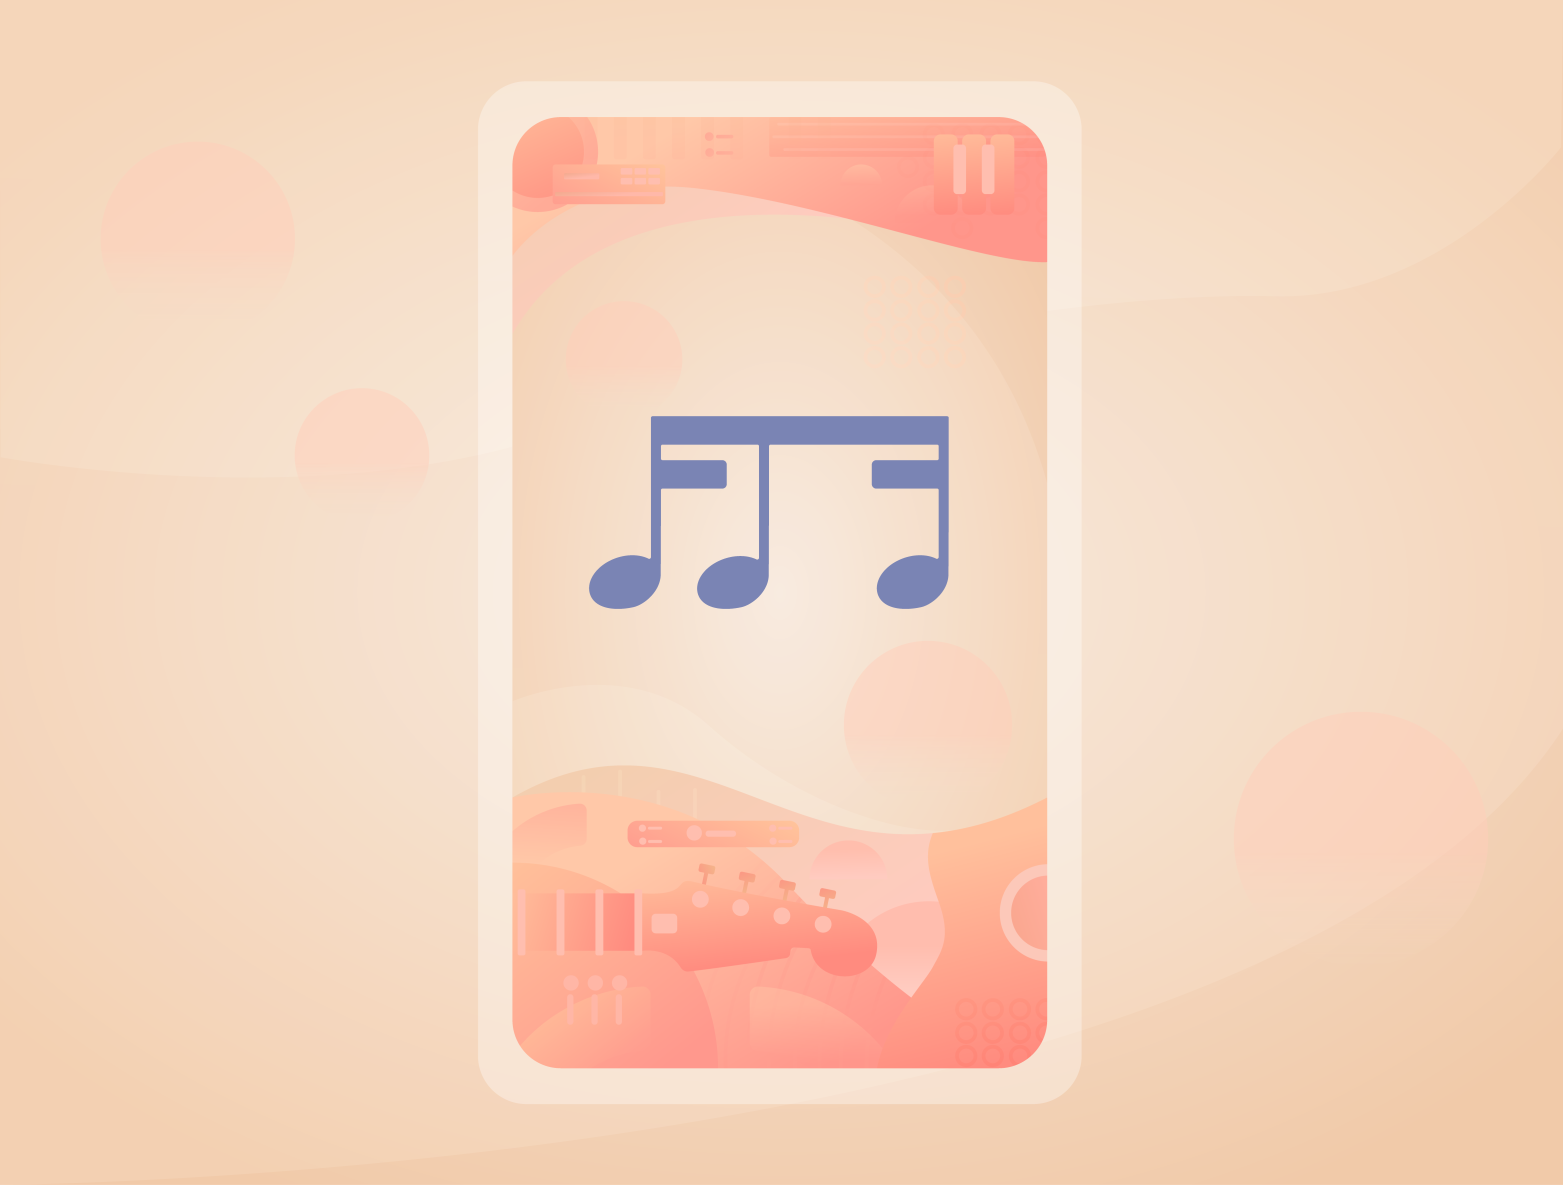 Music app background by Maria Chernigova on Dribbble